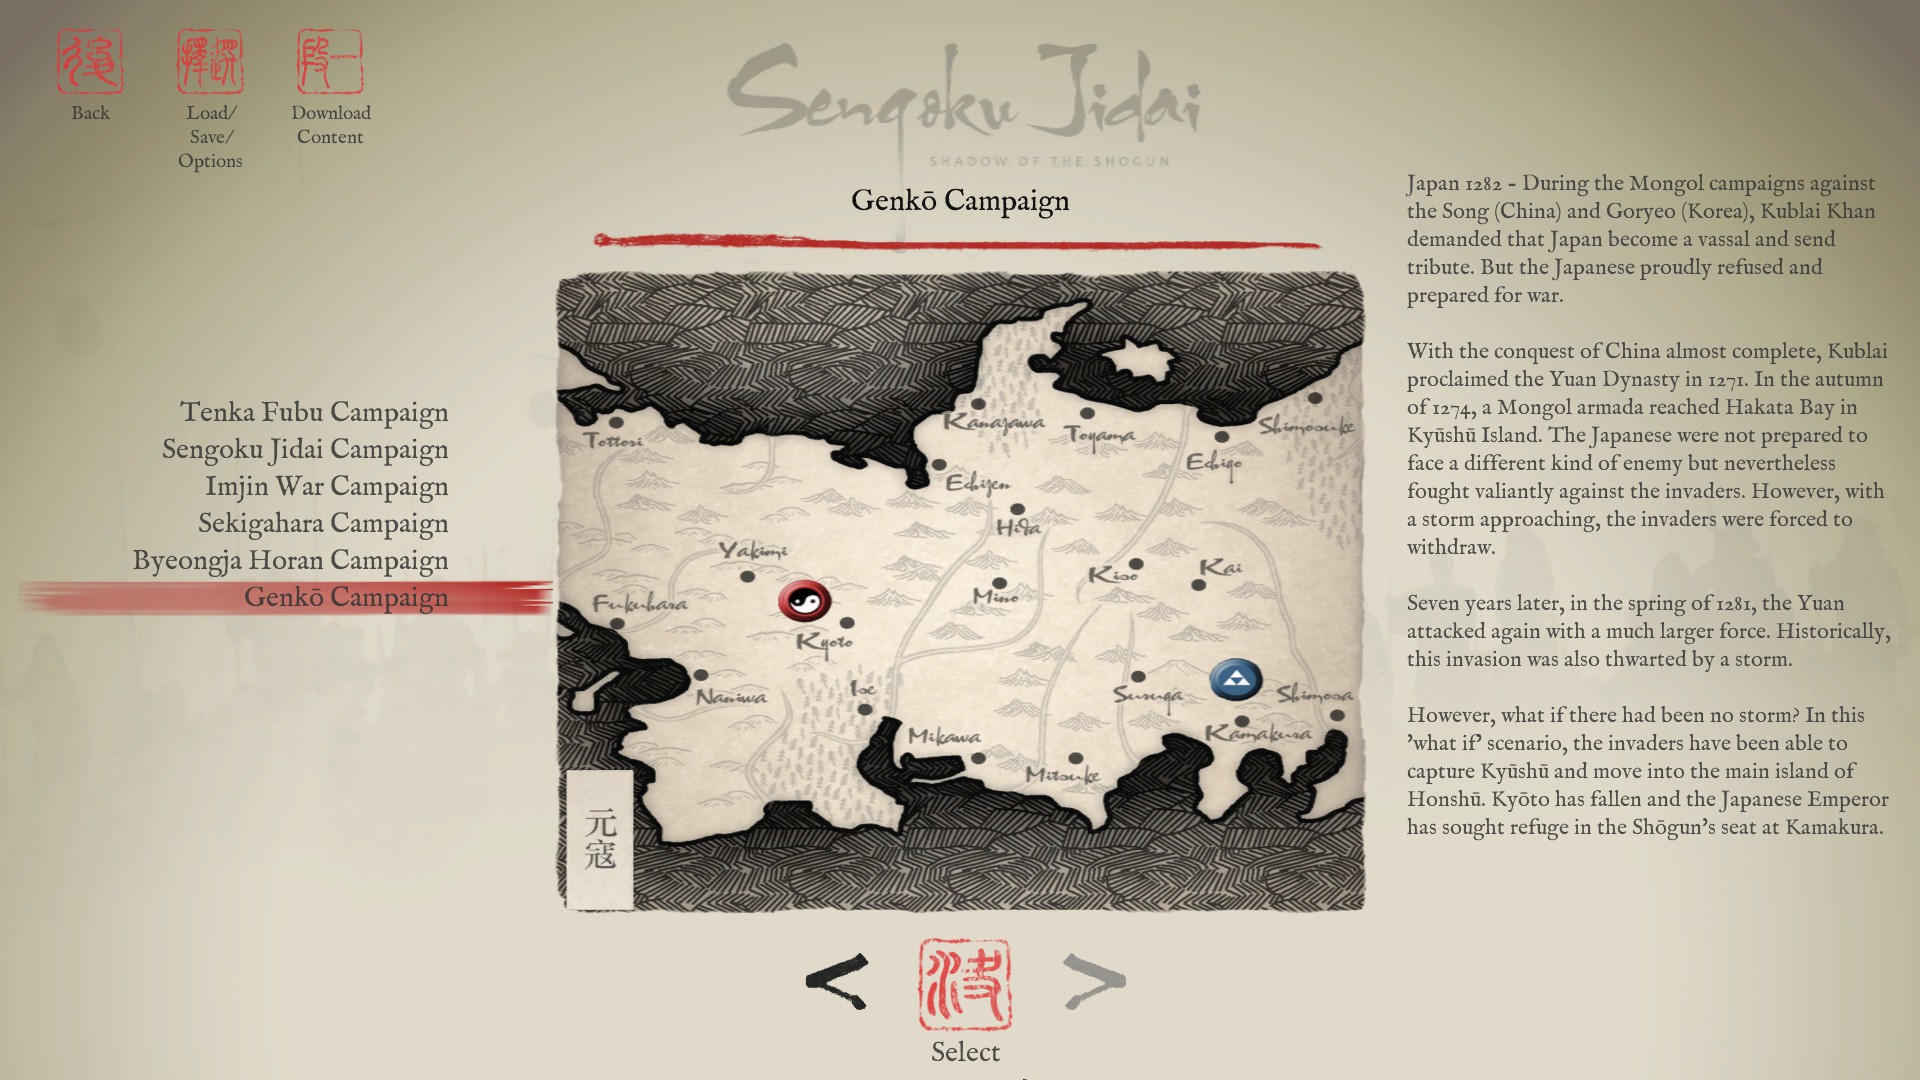 Sengoku Jidai – Genko Campaign (2nd Mongol Invasion of Japan 1281) Featured Screenshot #1